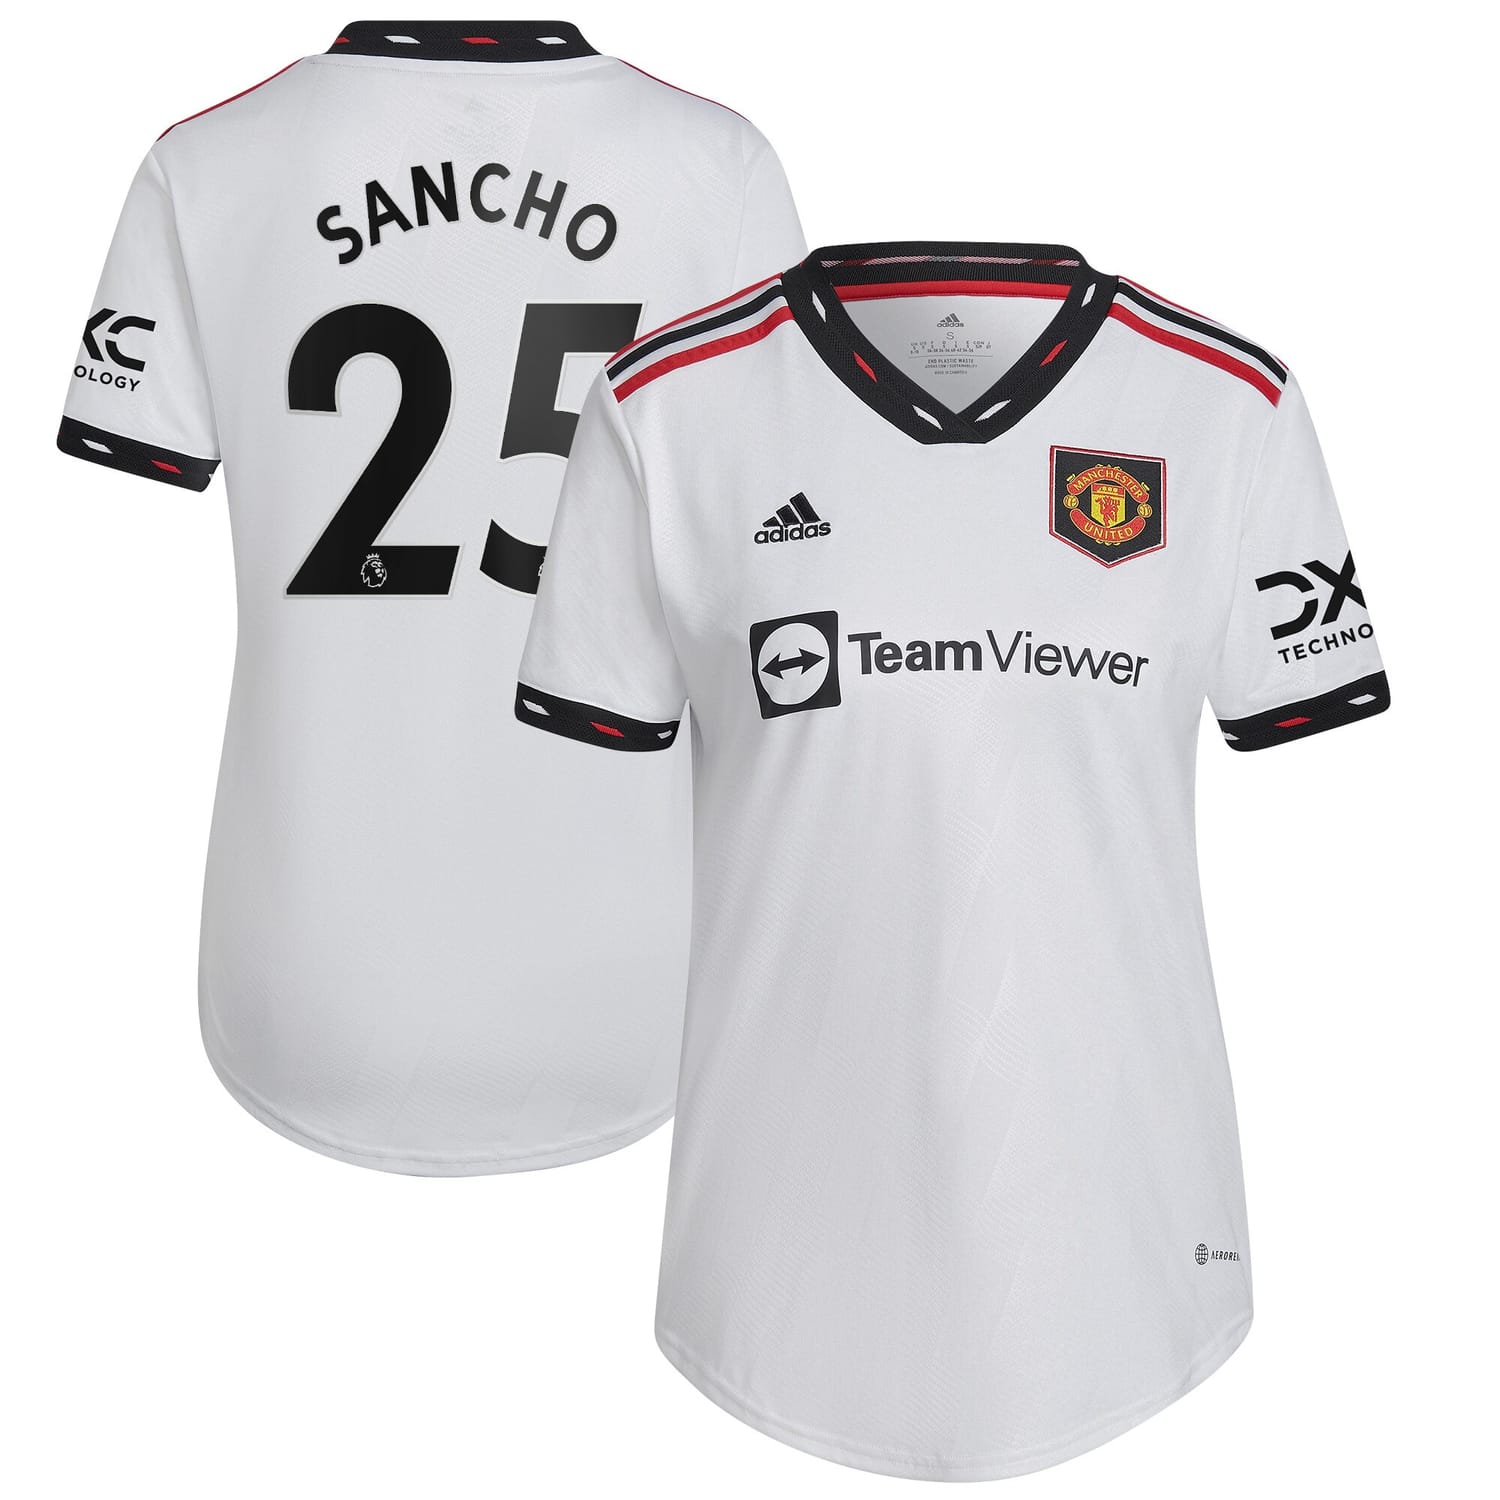 Premier League Manchester United Away Jersey Shirt White 2022-23 player Jadon Sancho printing for Women